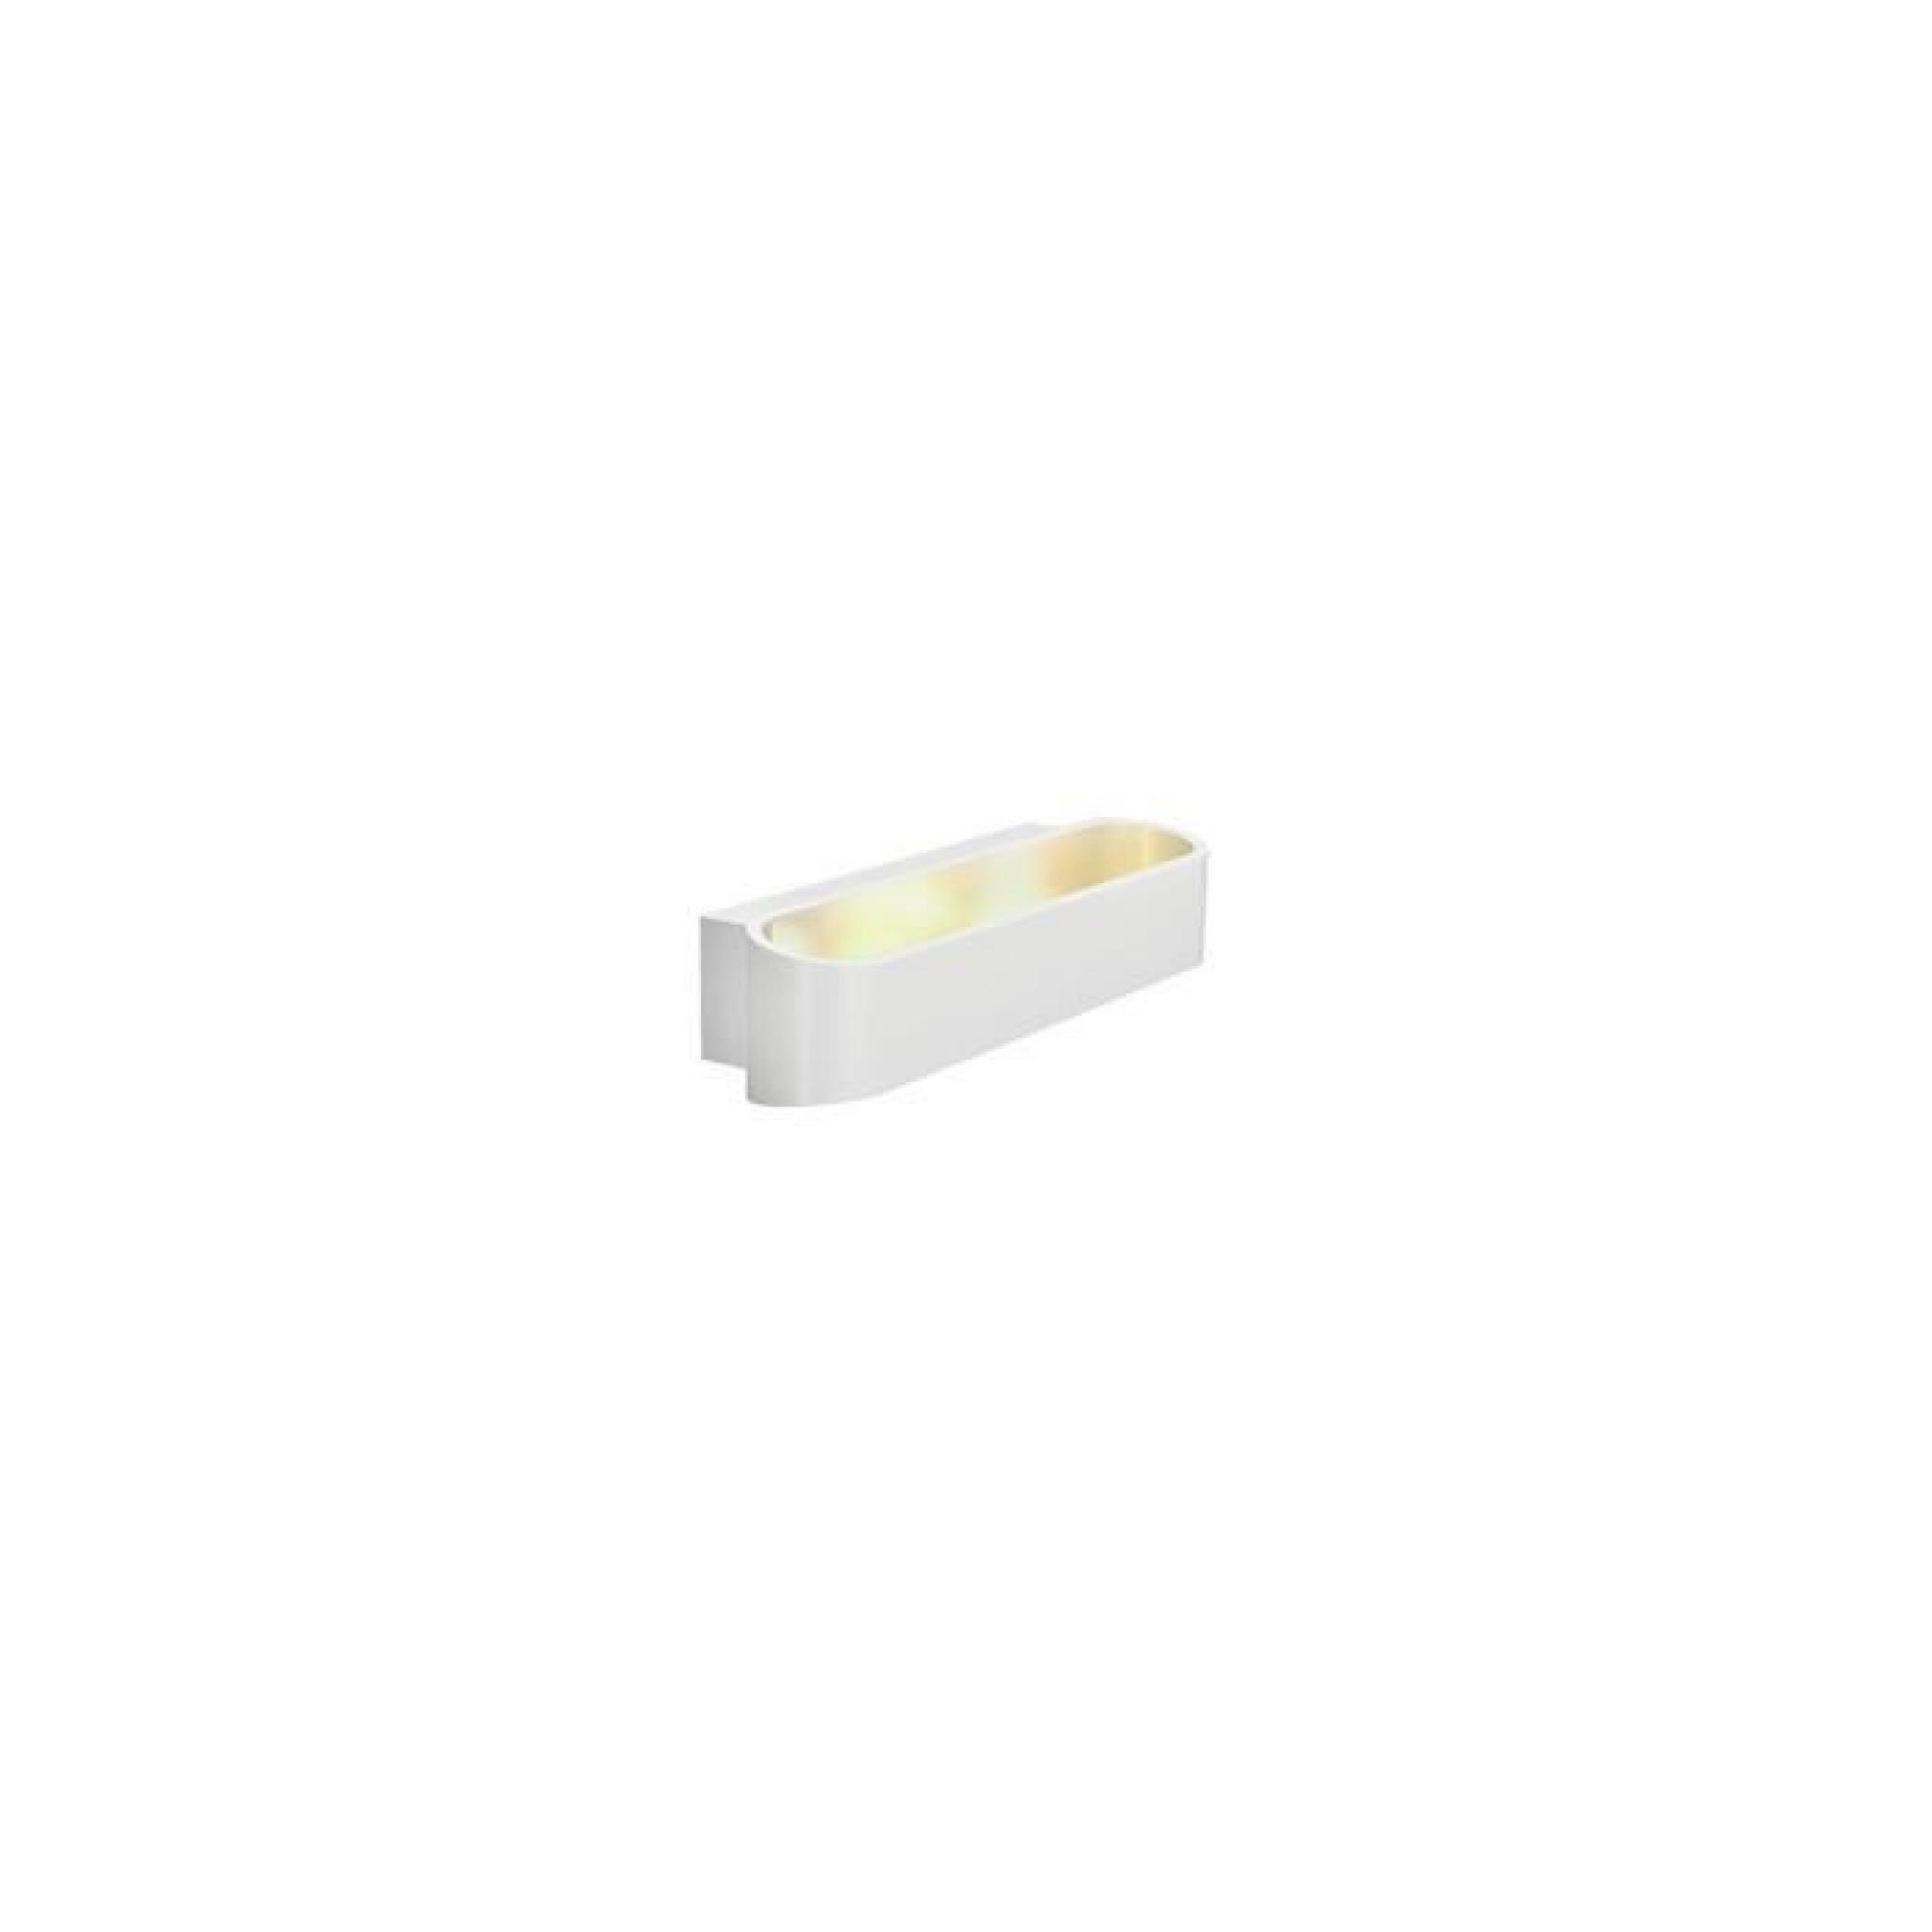 ASSO LED 300 applique, oval, blanc, 2x 5W LED, 3000K